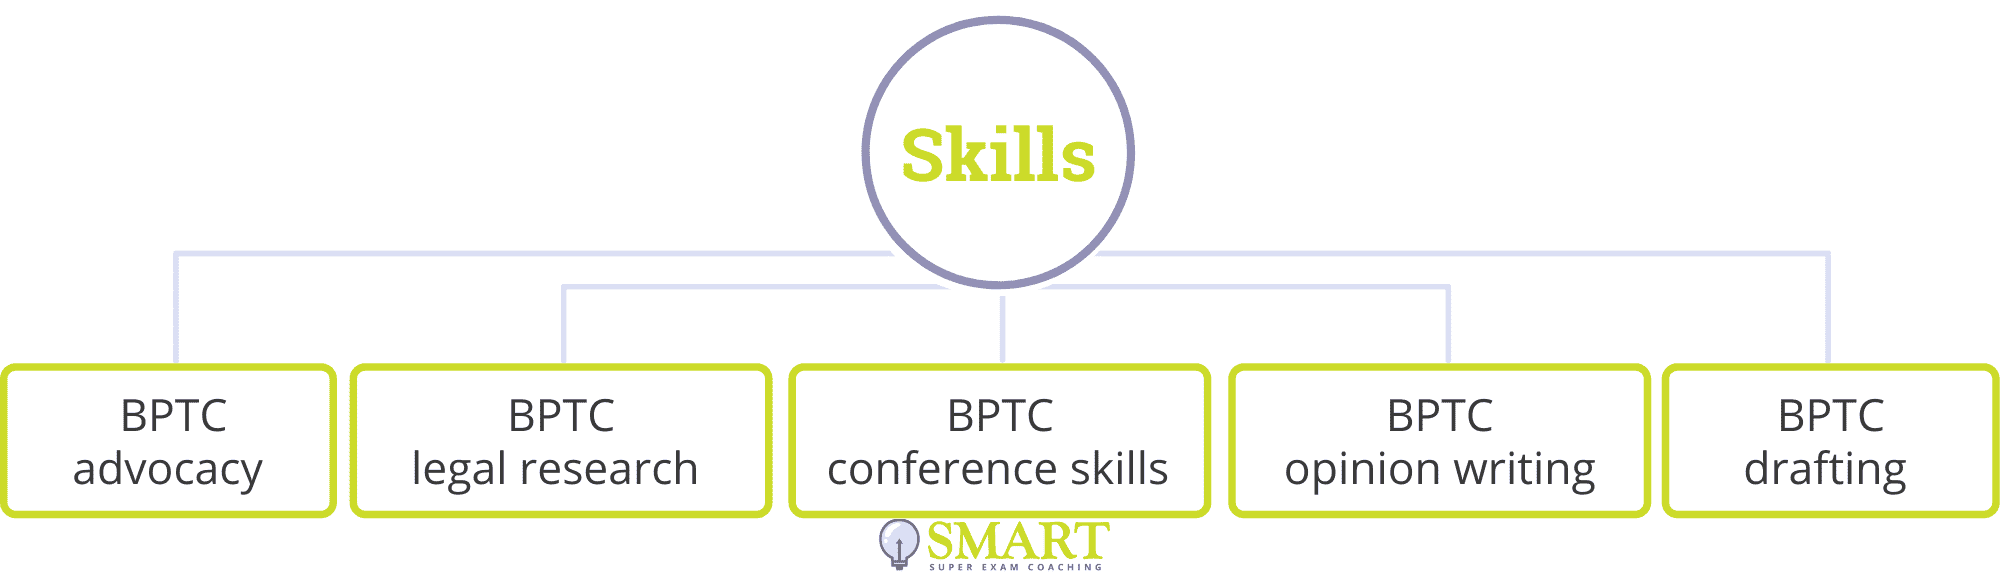 BPTC Skills